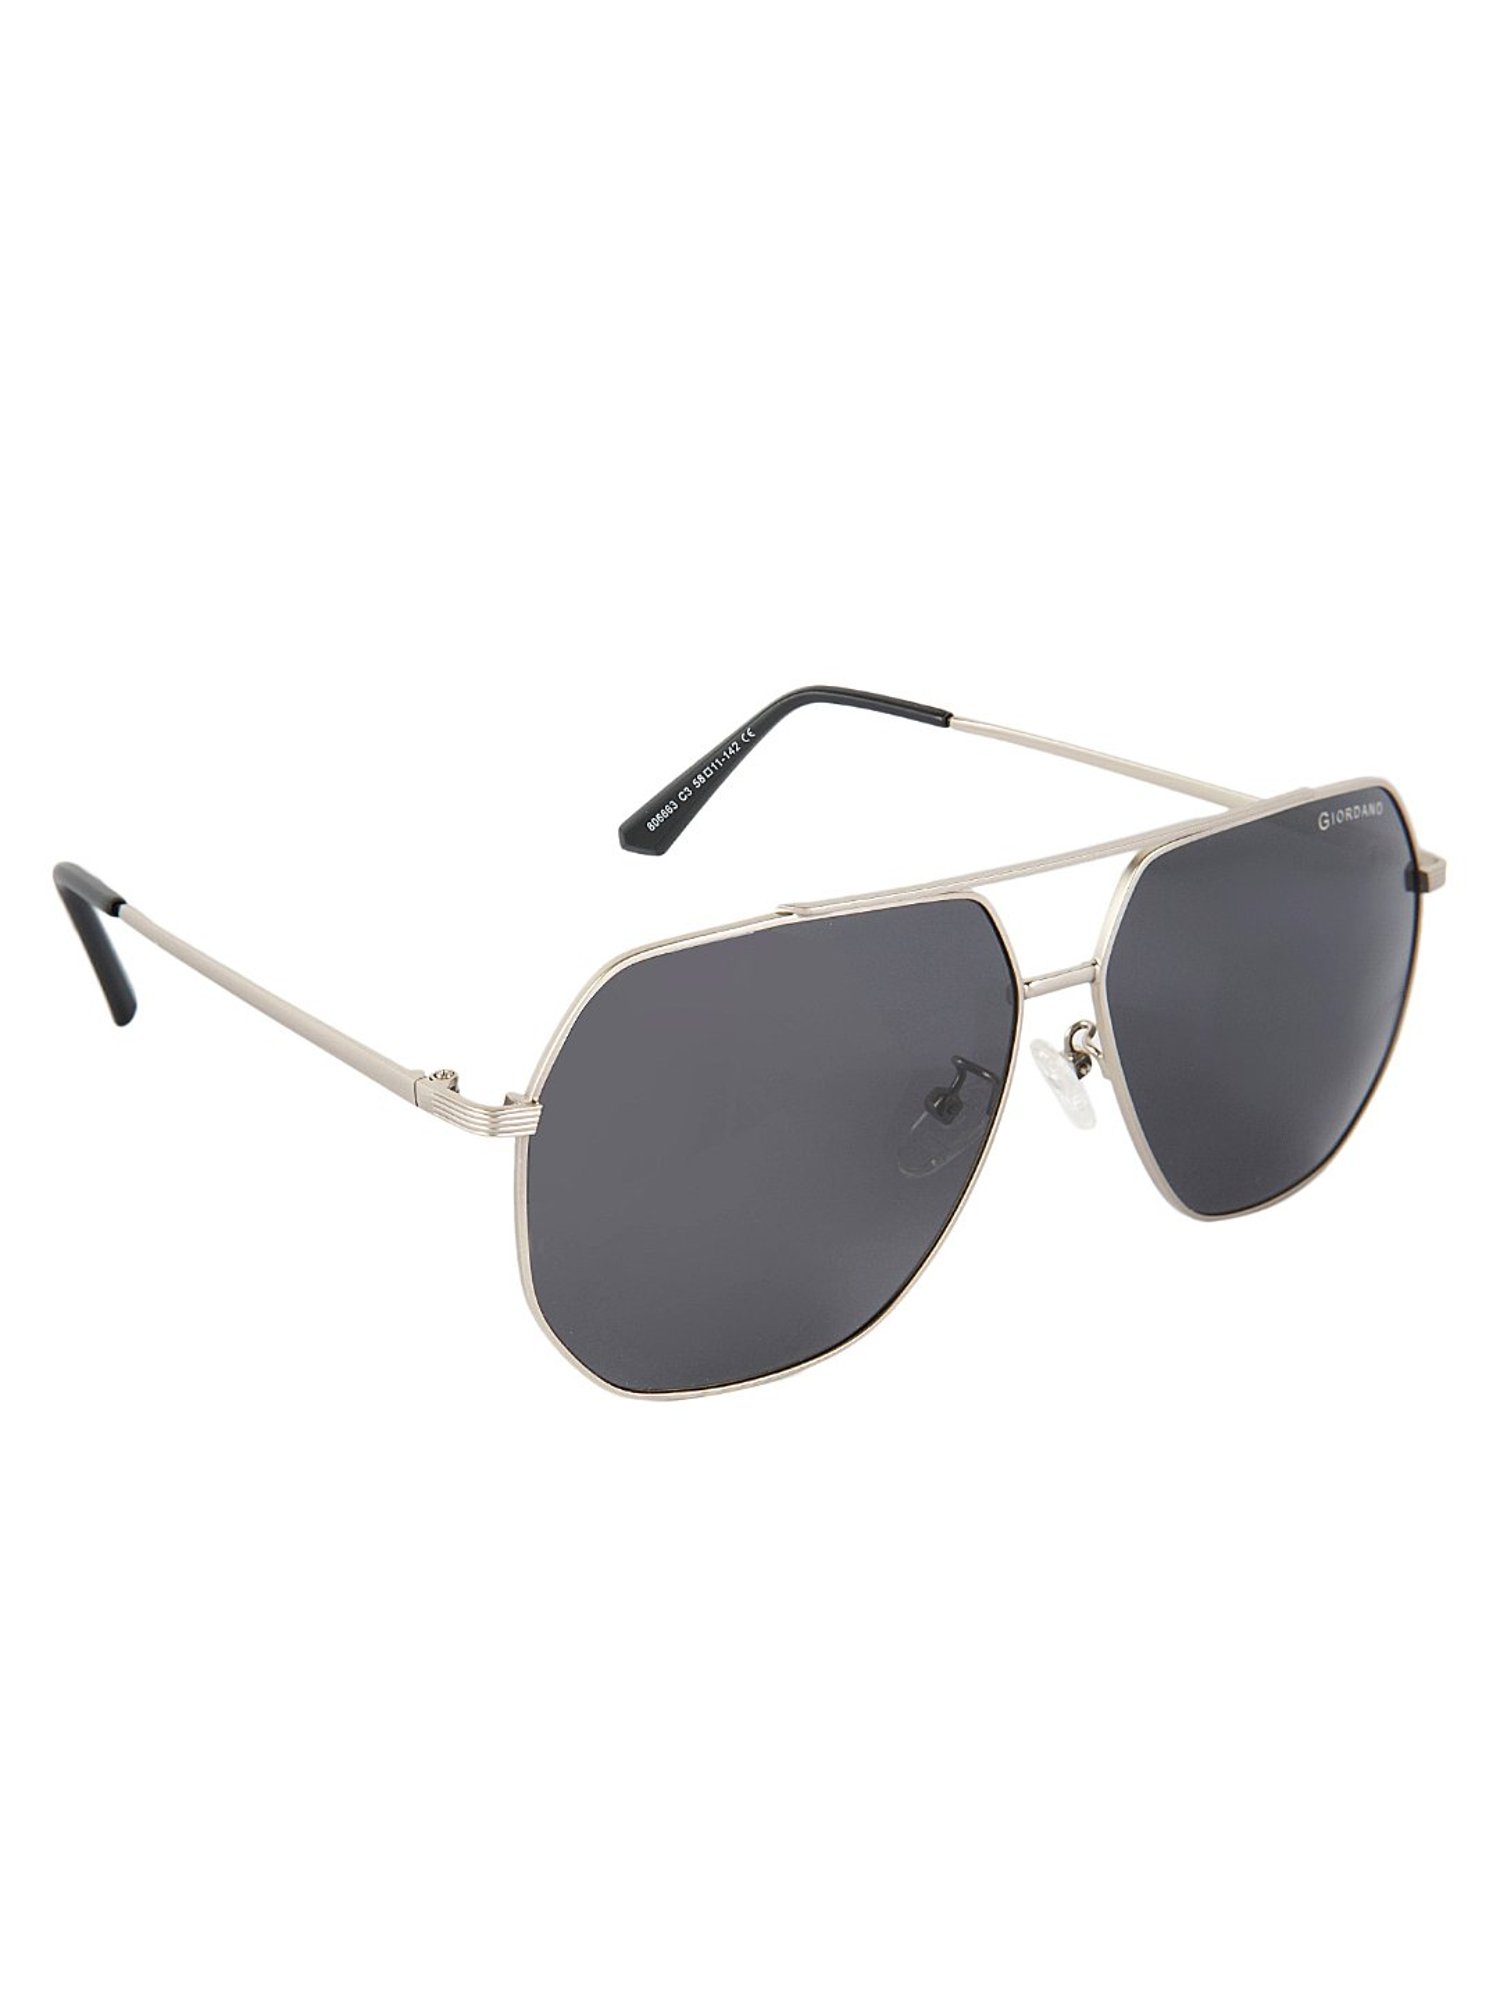 Buy Giordano Polarized Sunglasses Uv Protected Use for Men & Women -  Ga90302C01 (56) online